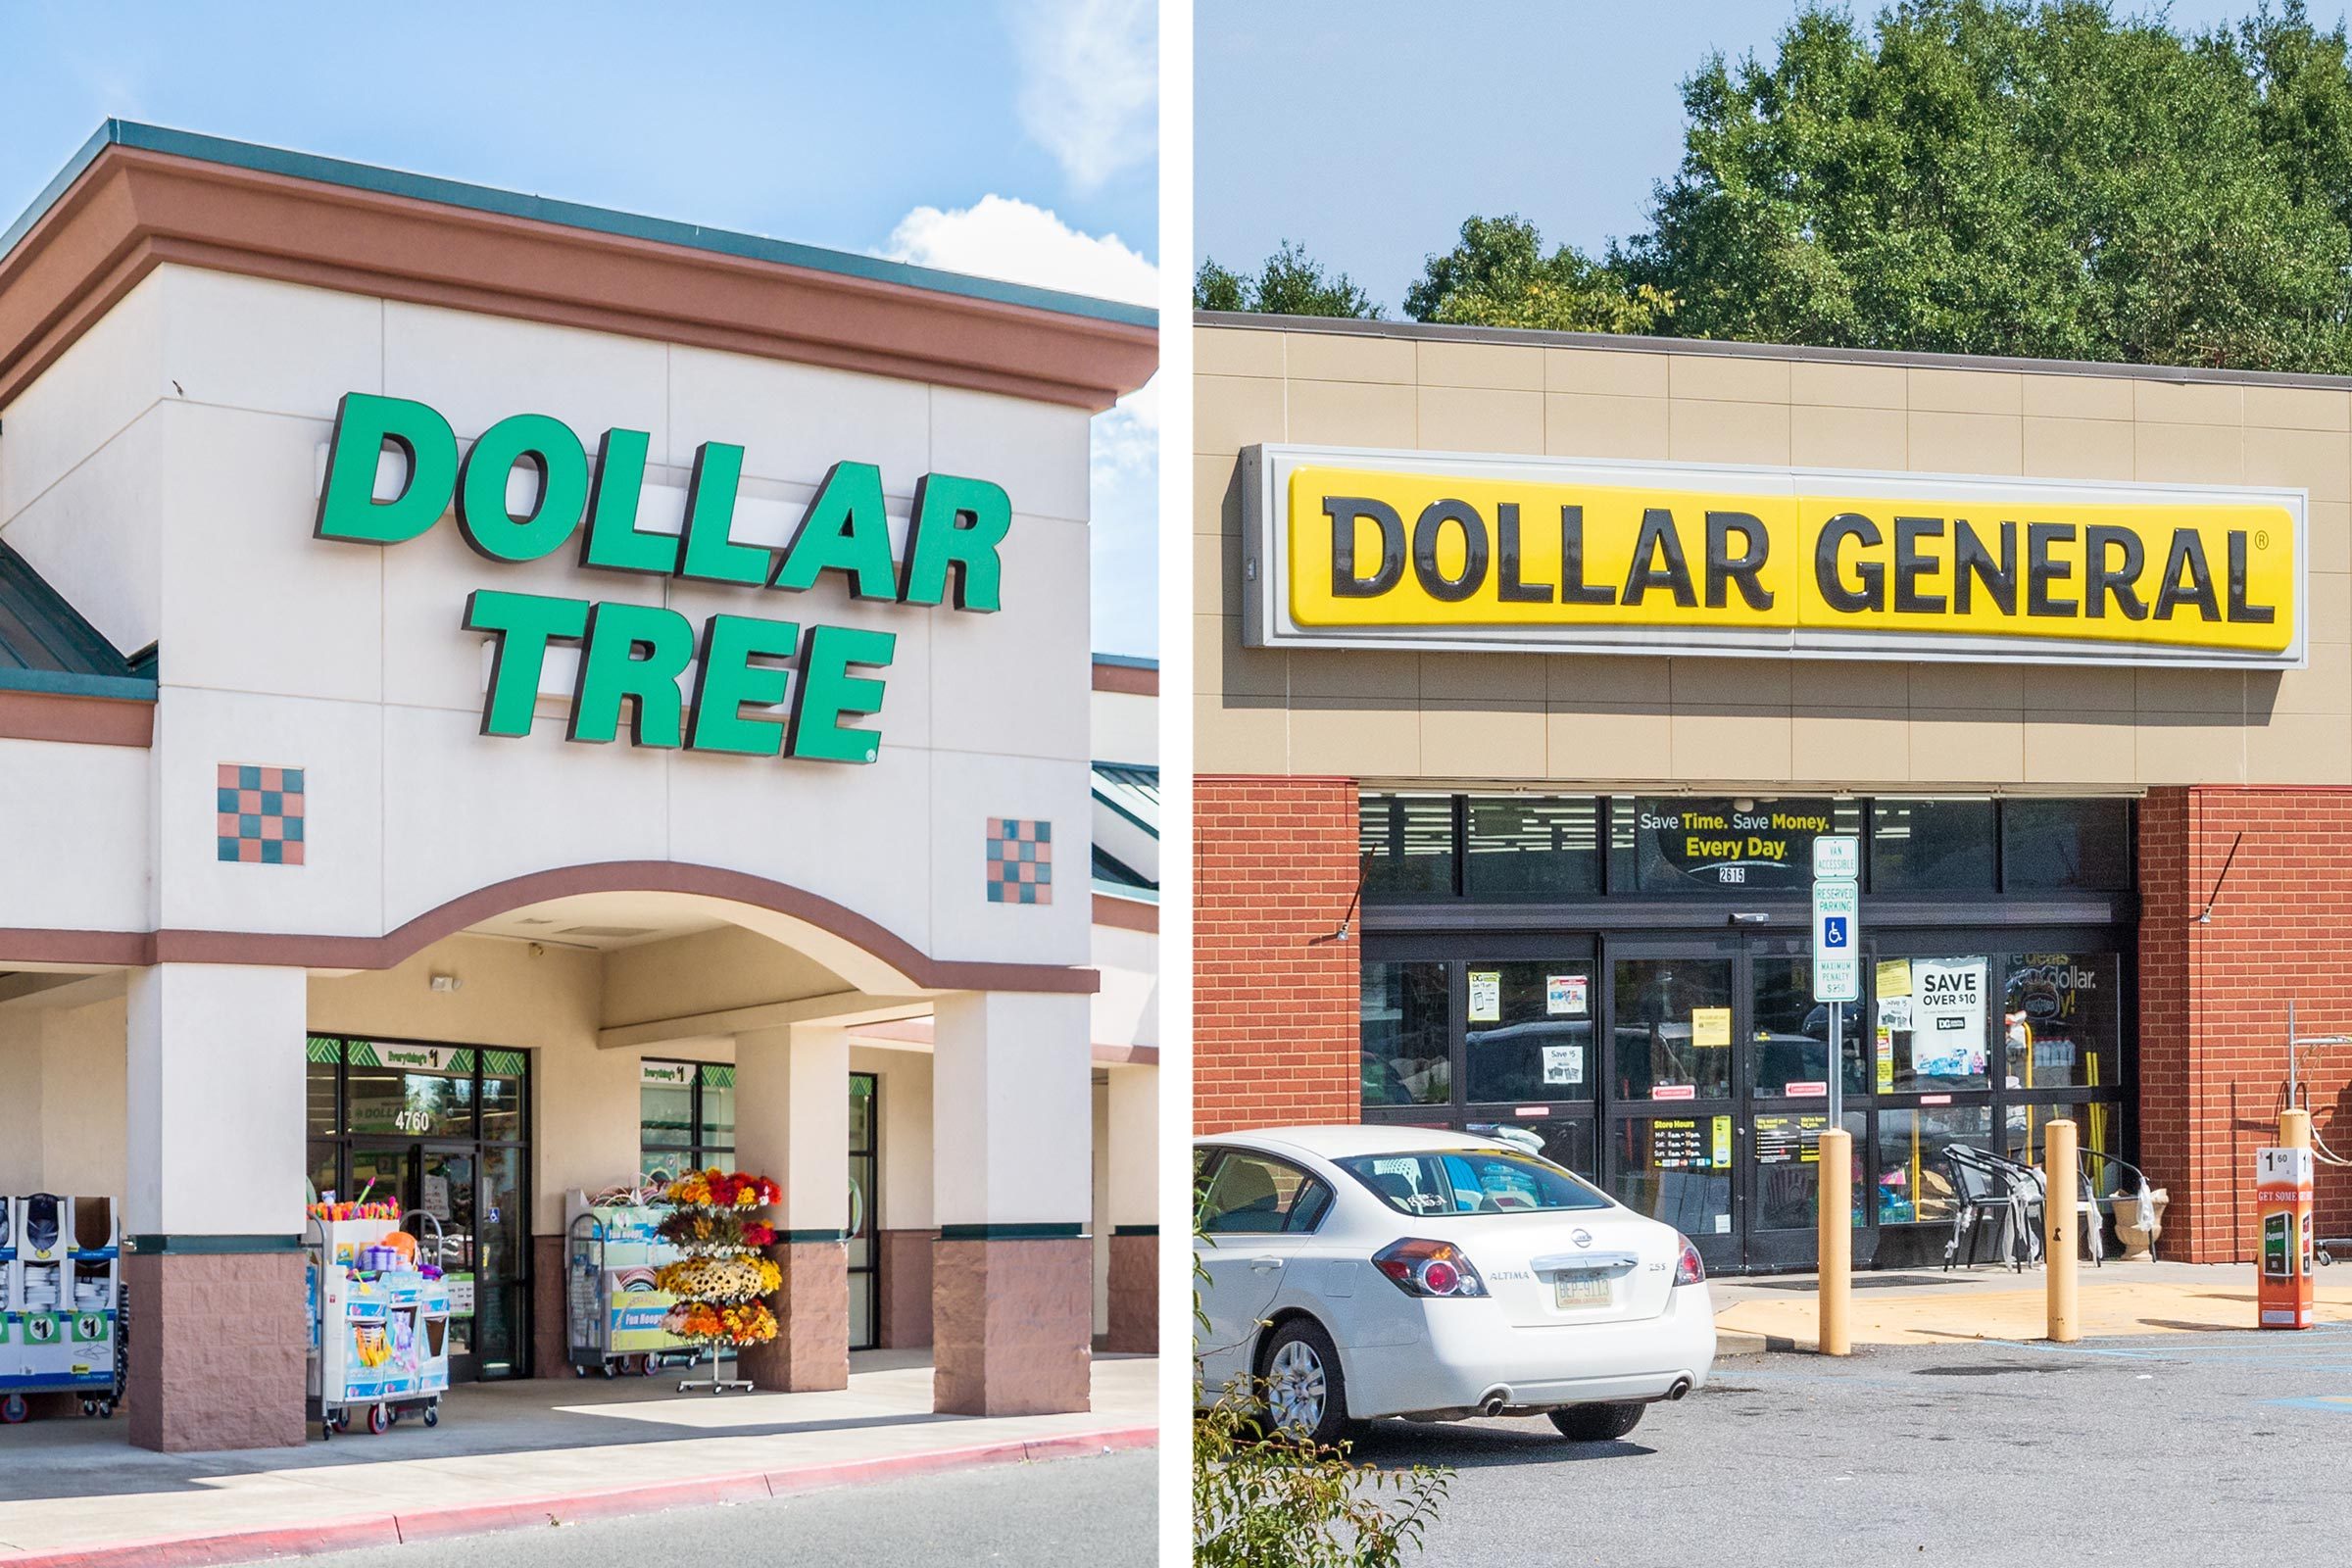 Dollar Tree Versus Dollar General GettyImages 508013297 1050794276 MLedit 